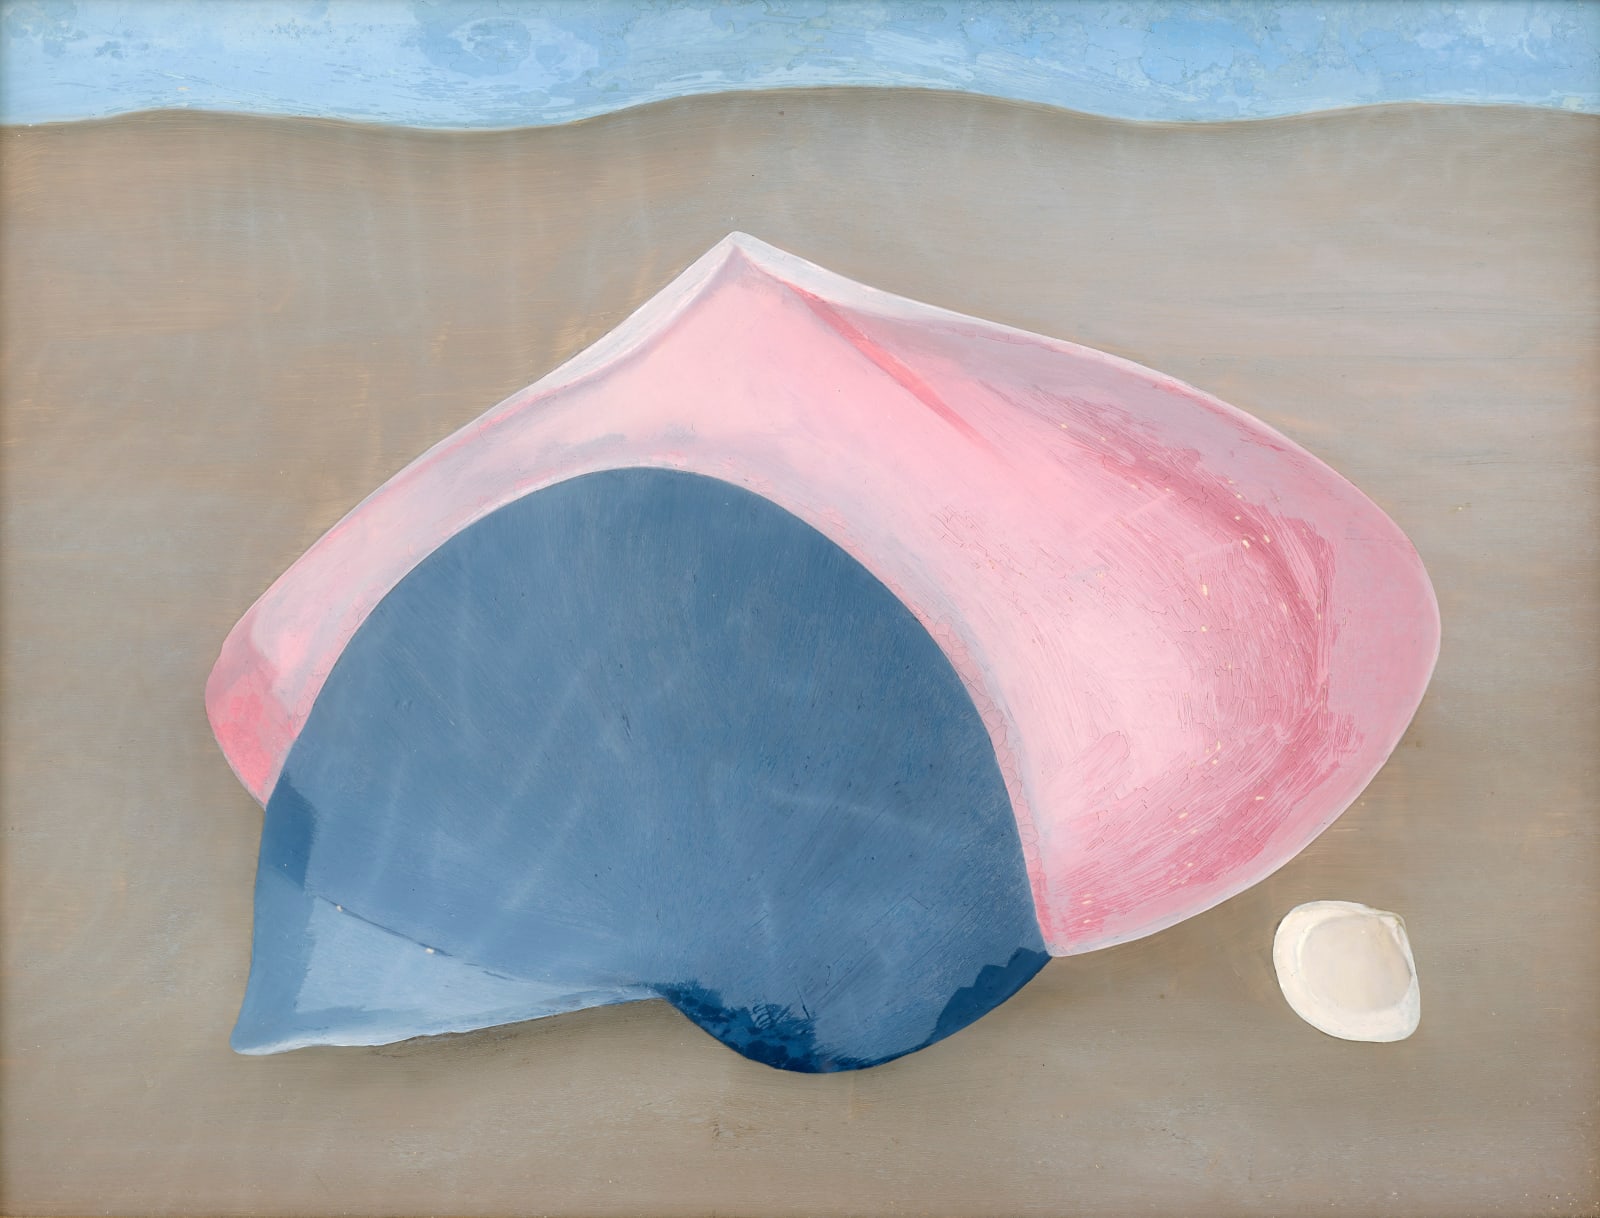 Rebecca Salsbury James, Shells on the Sand, 1935